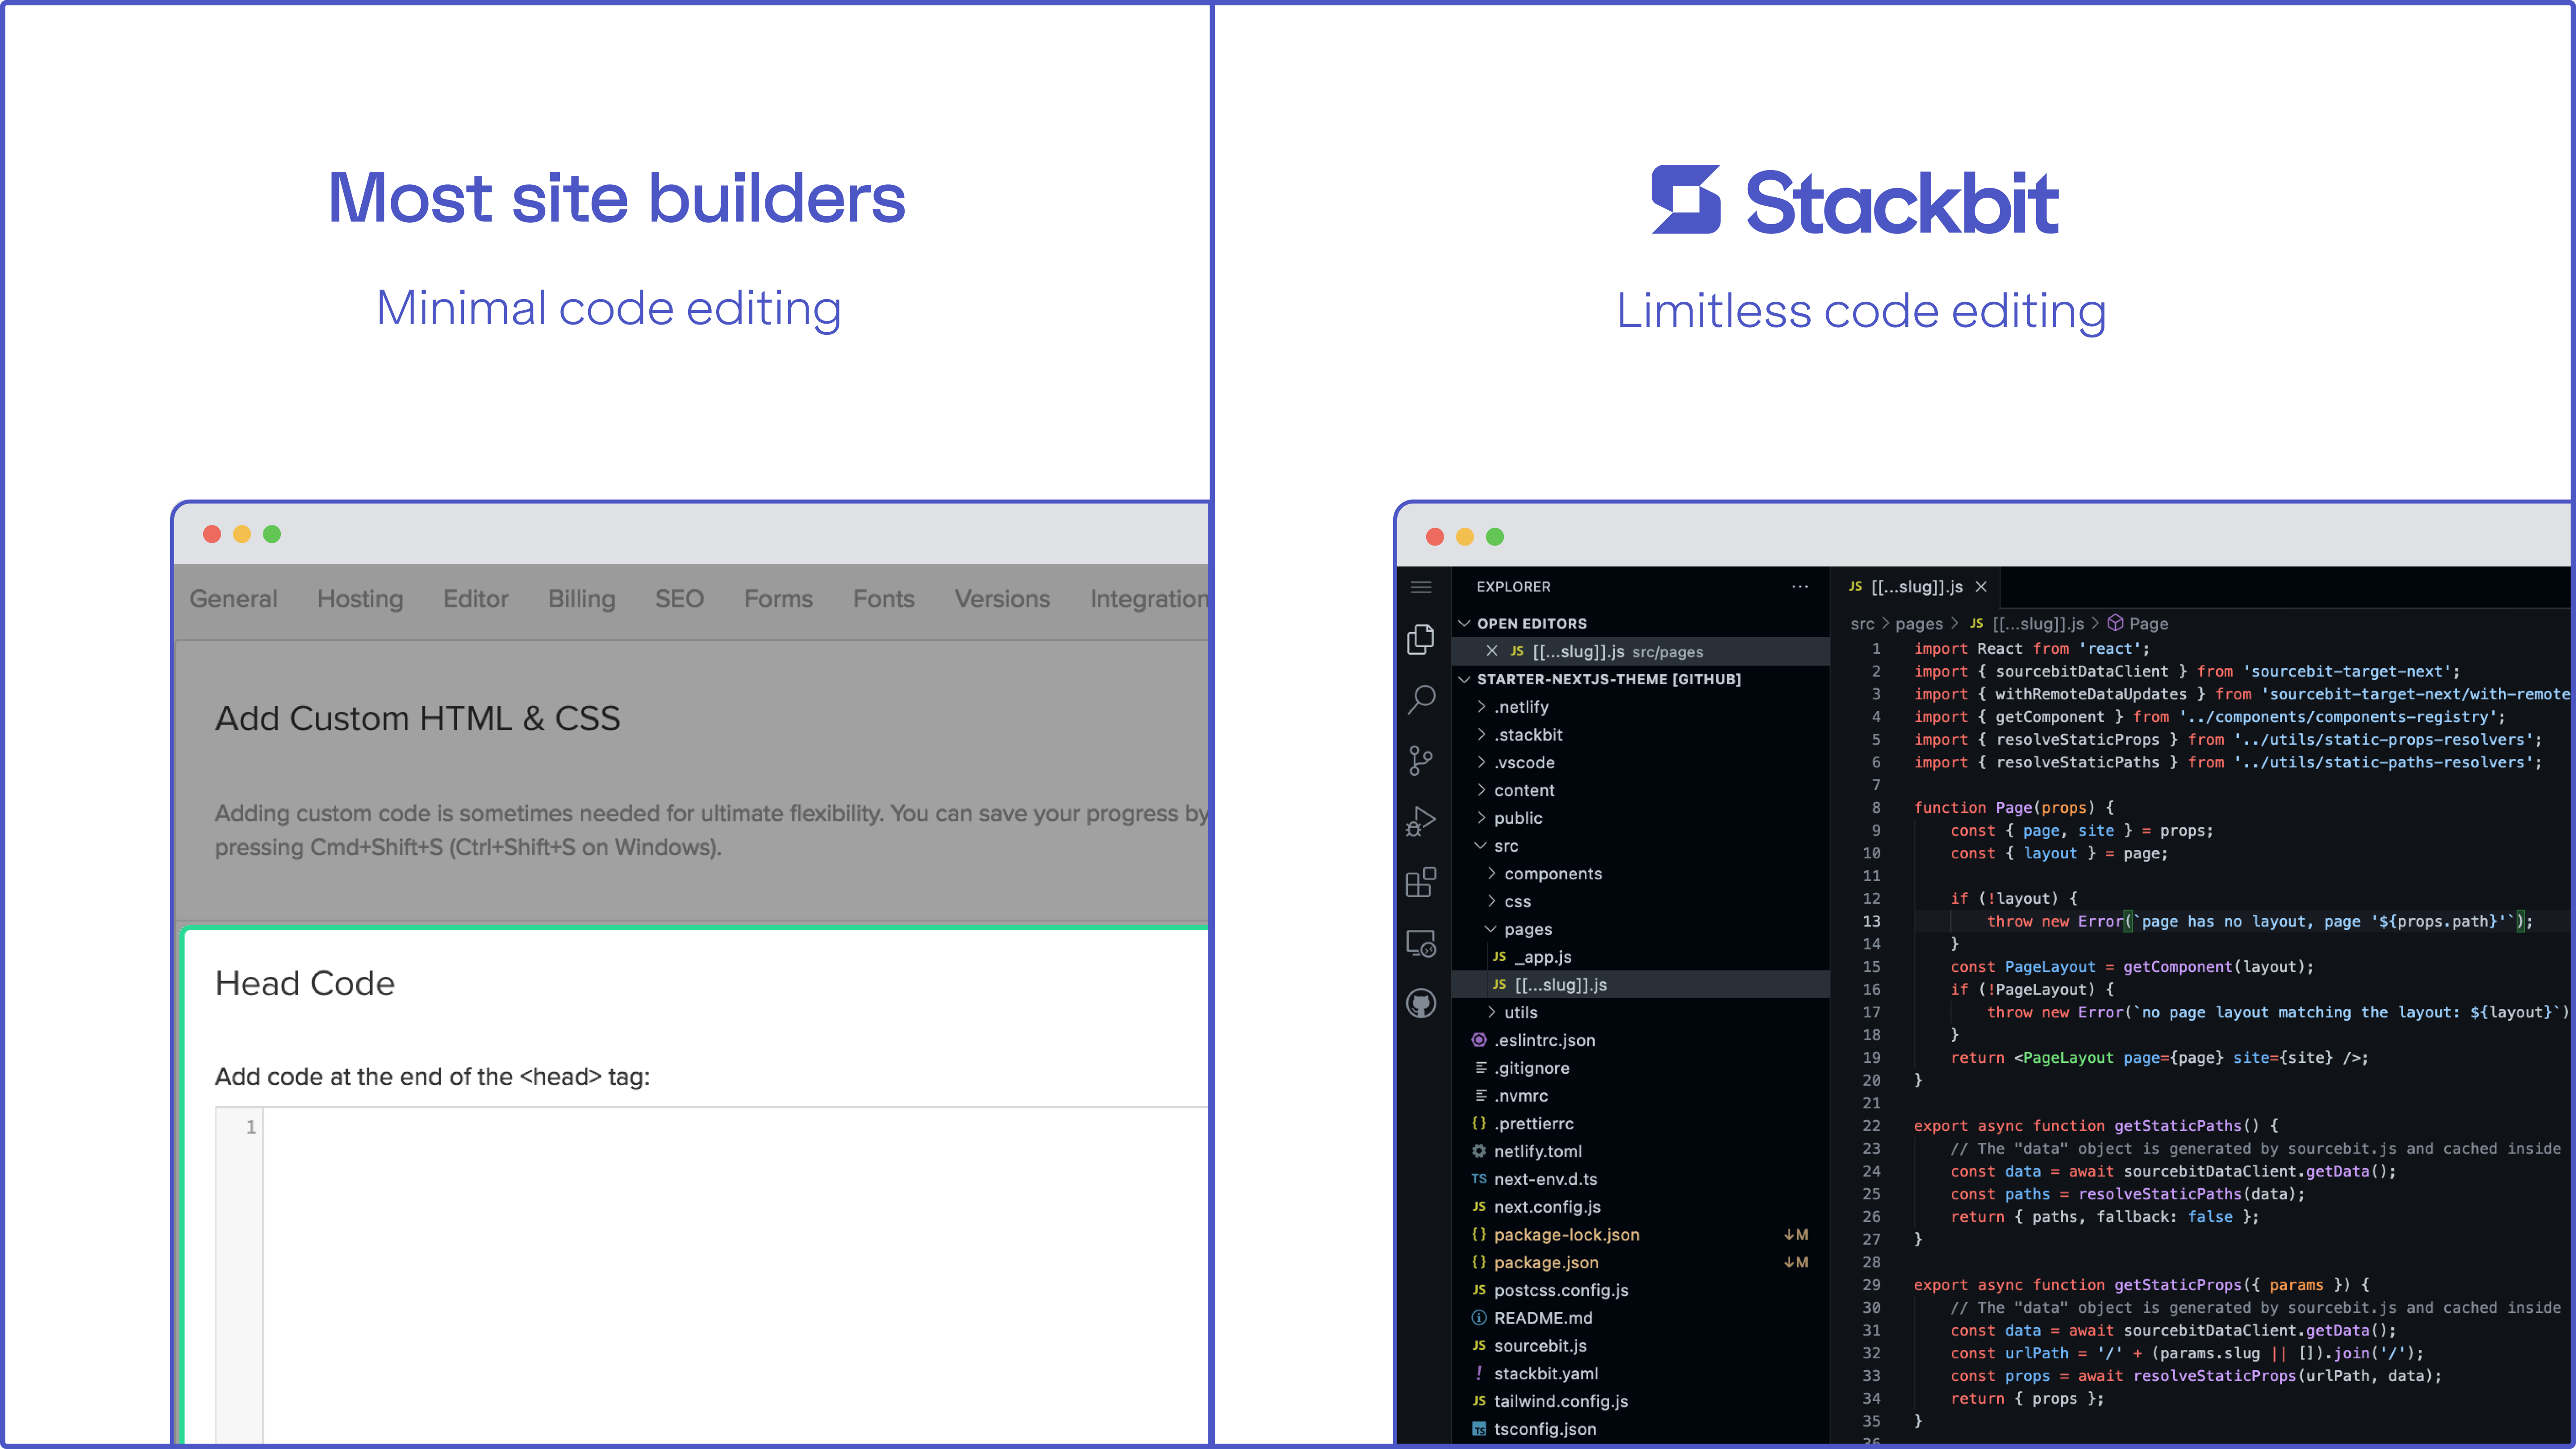 Stackbit vs Traditional Site Builders